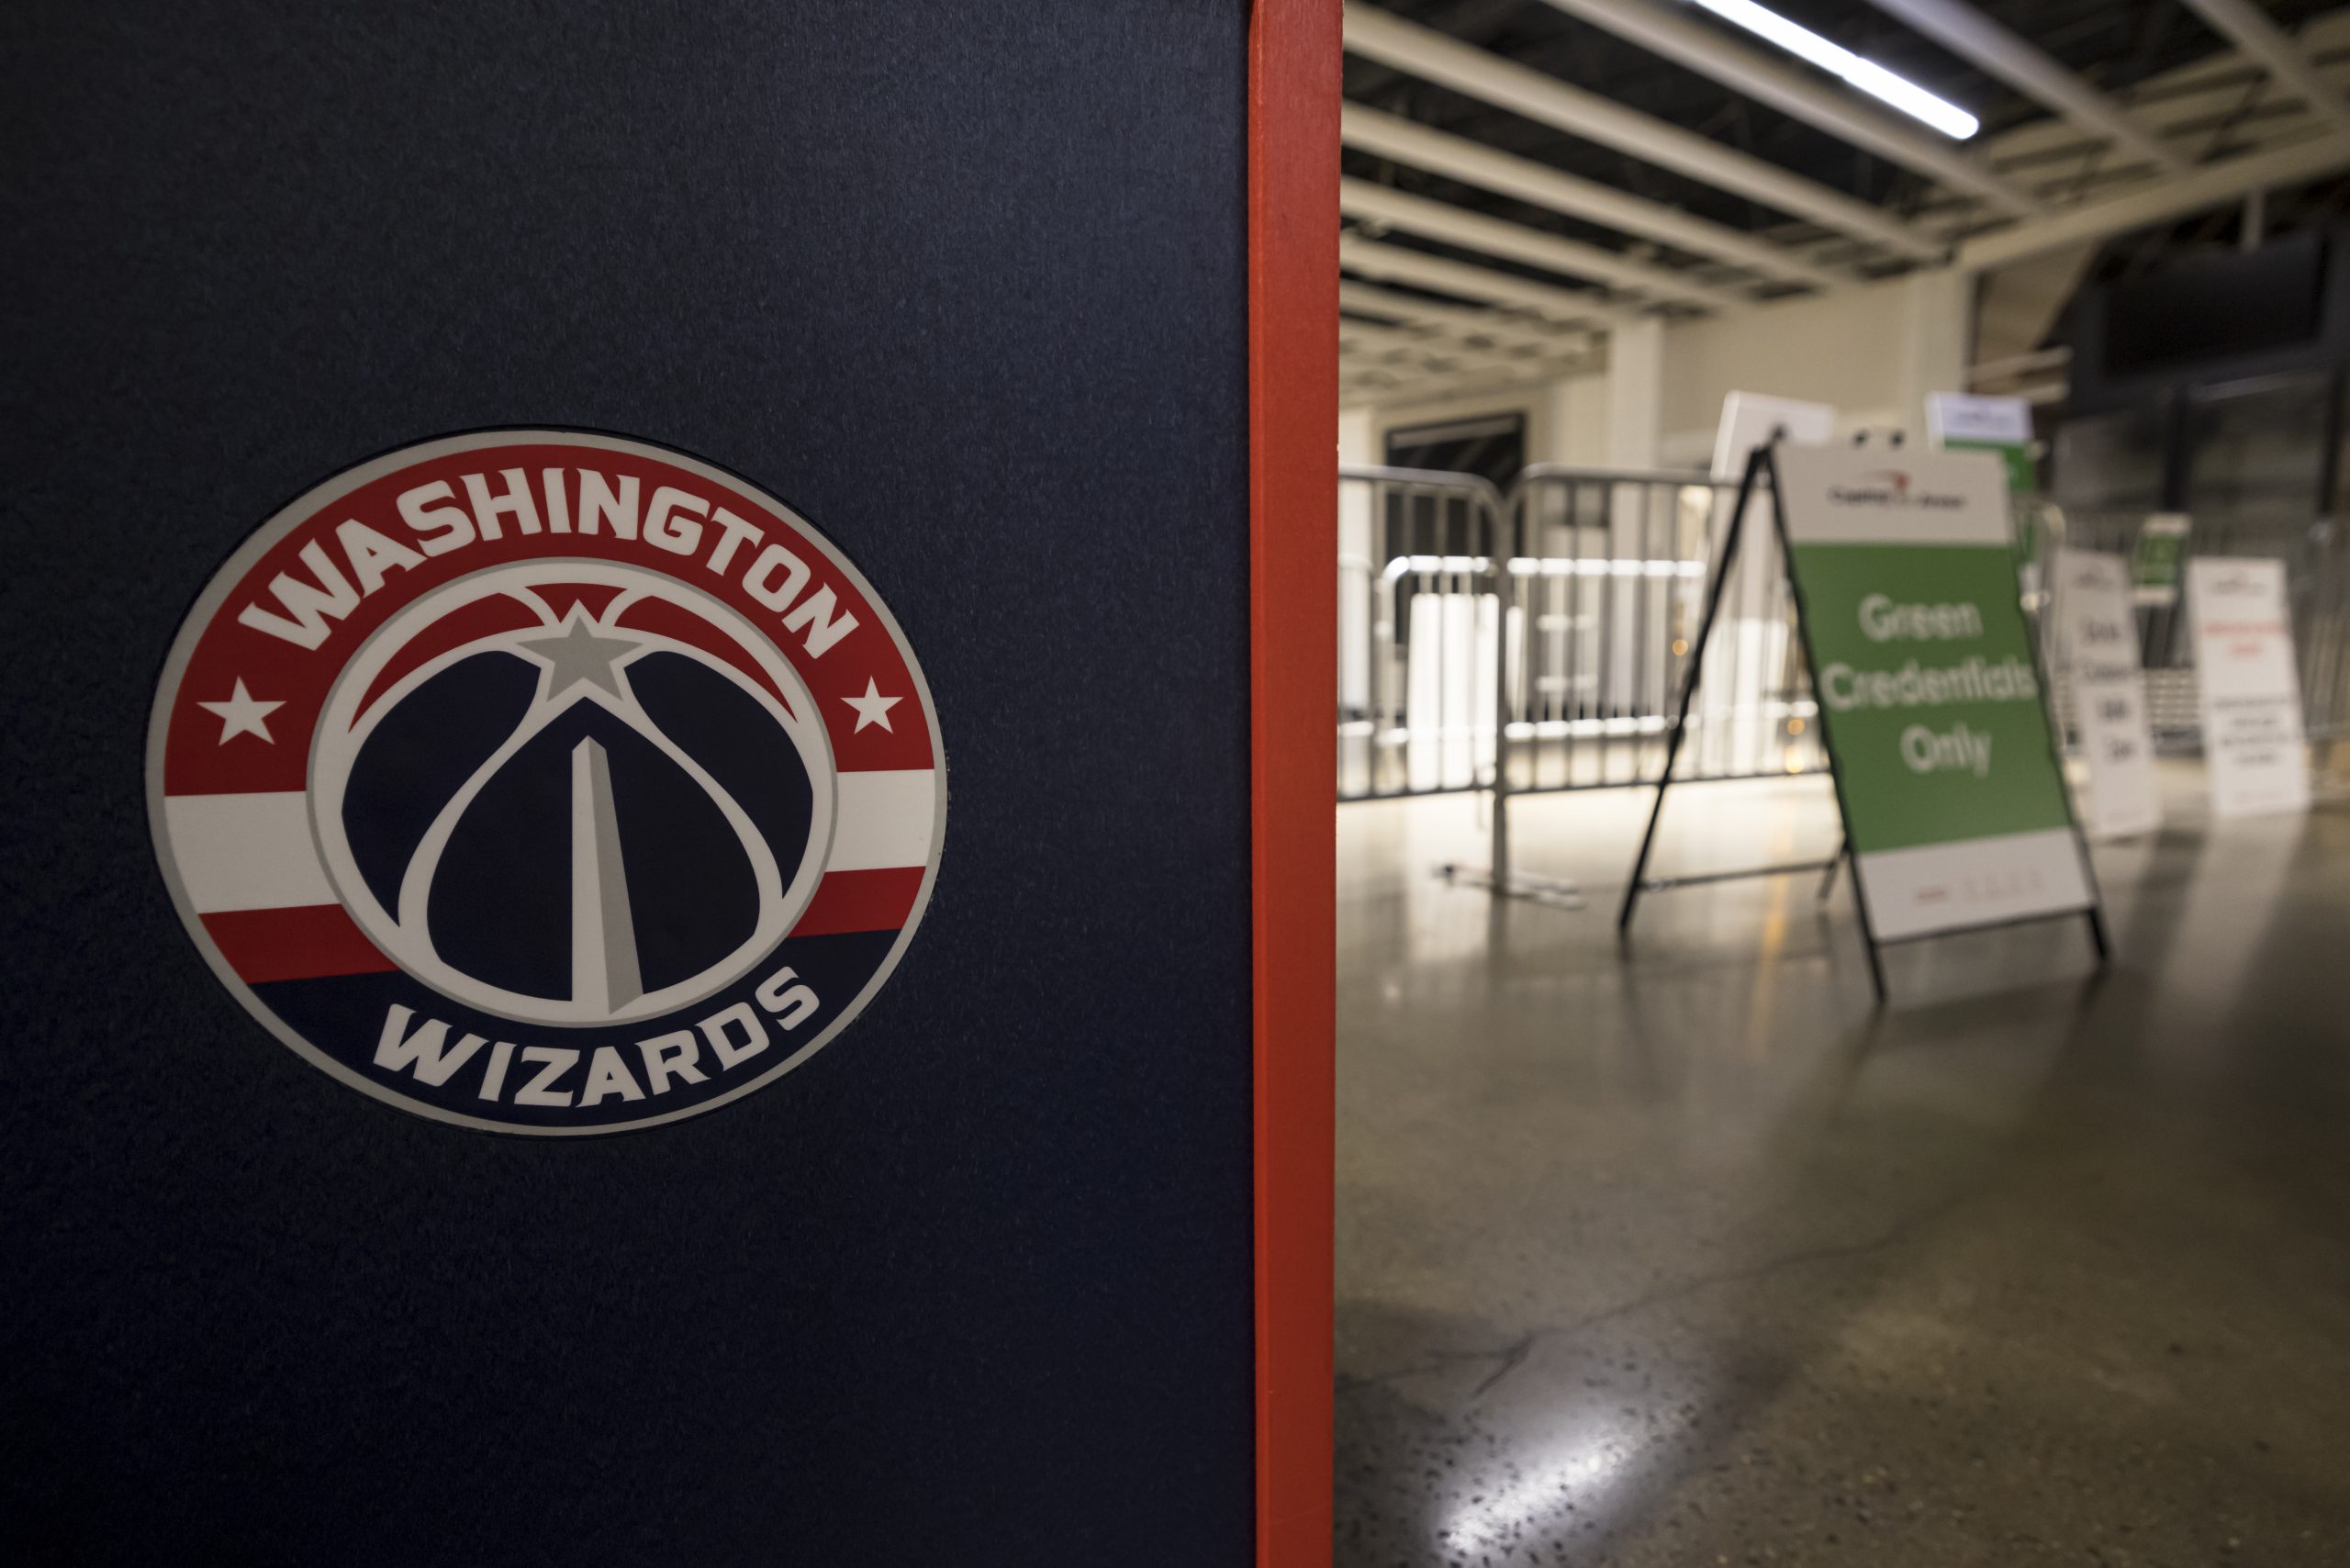 Qatar Investment Authority buys 5% of NBA's Washington Wizards